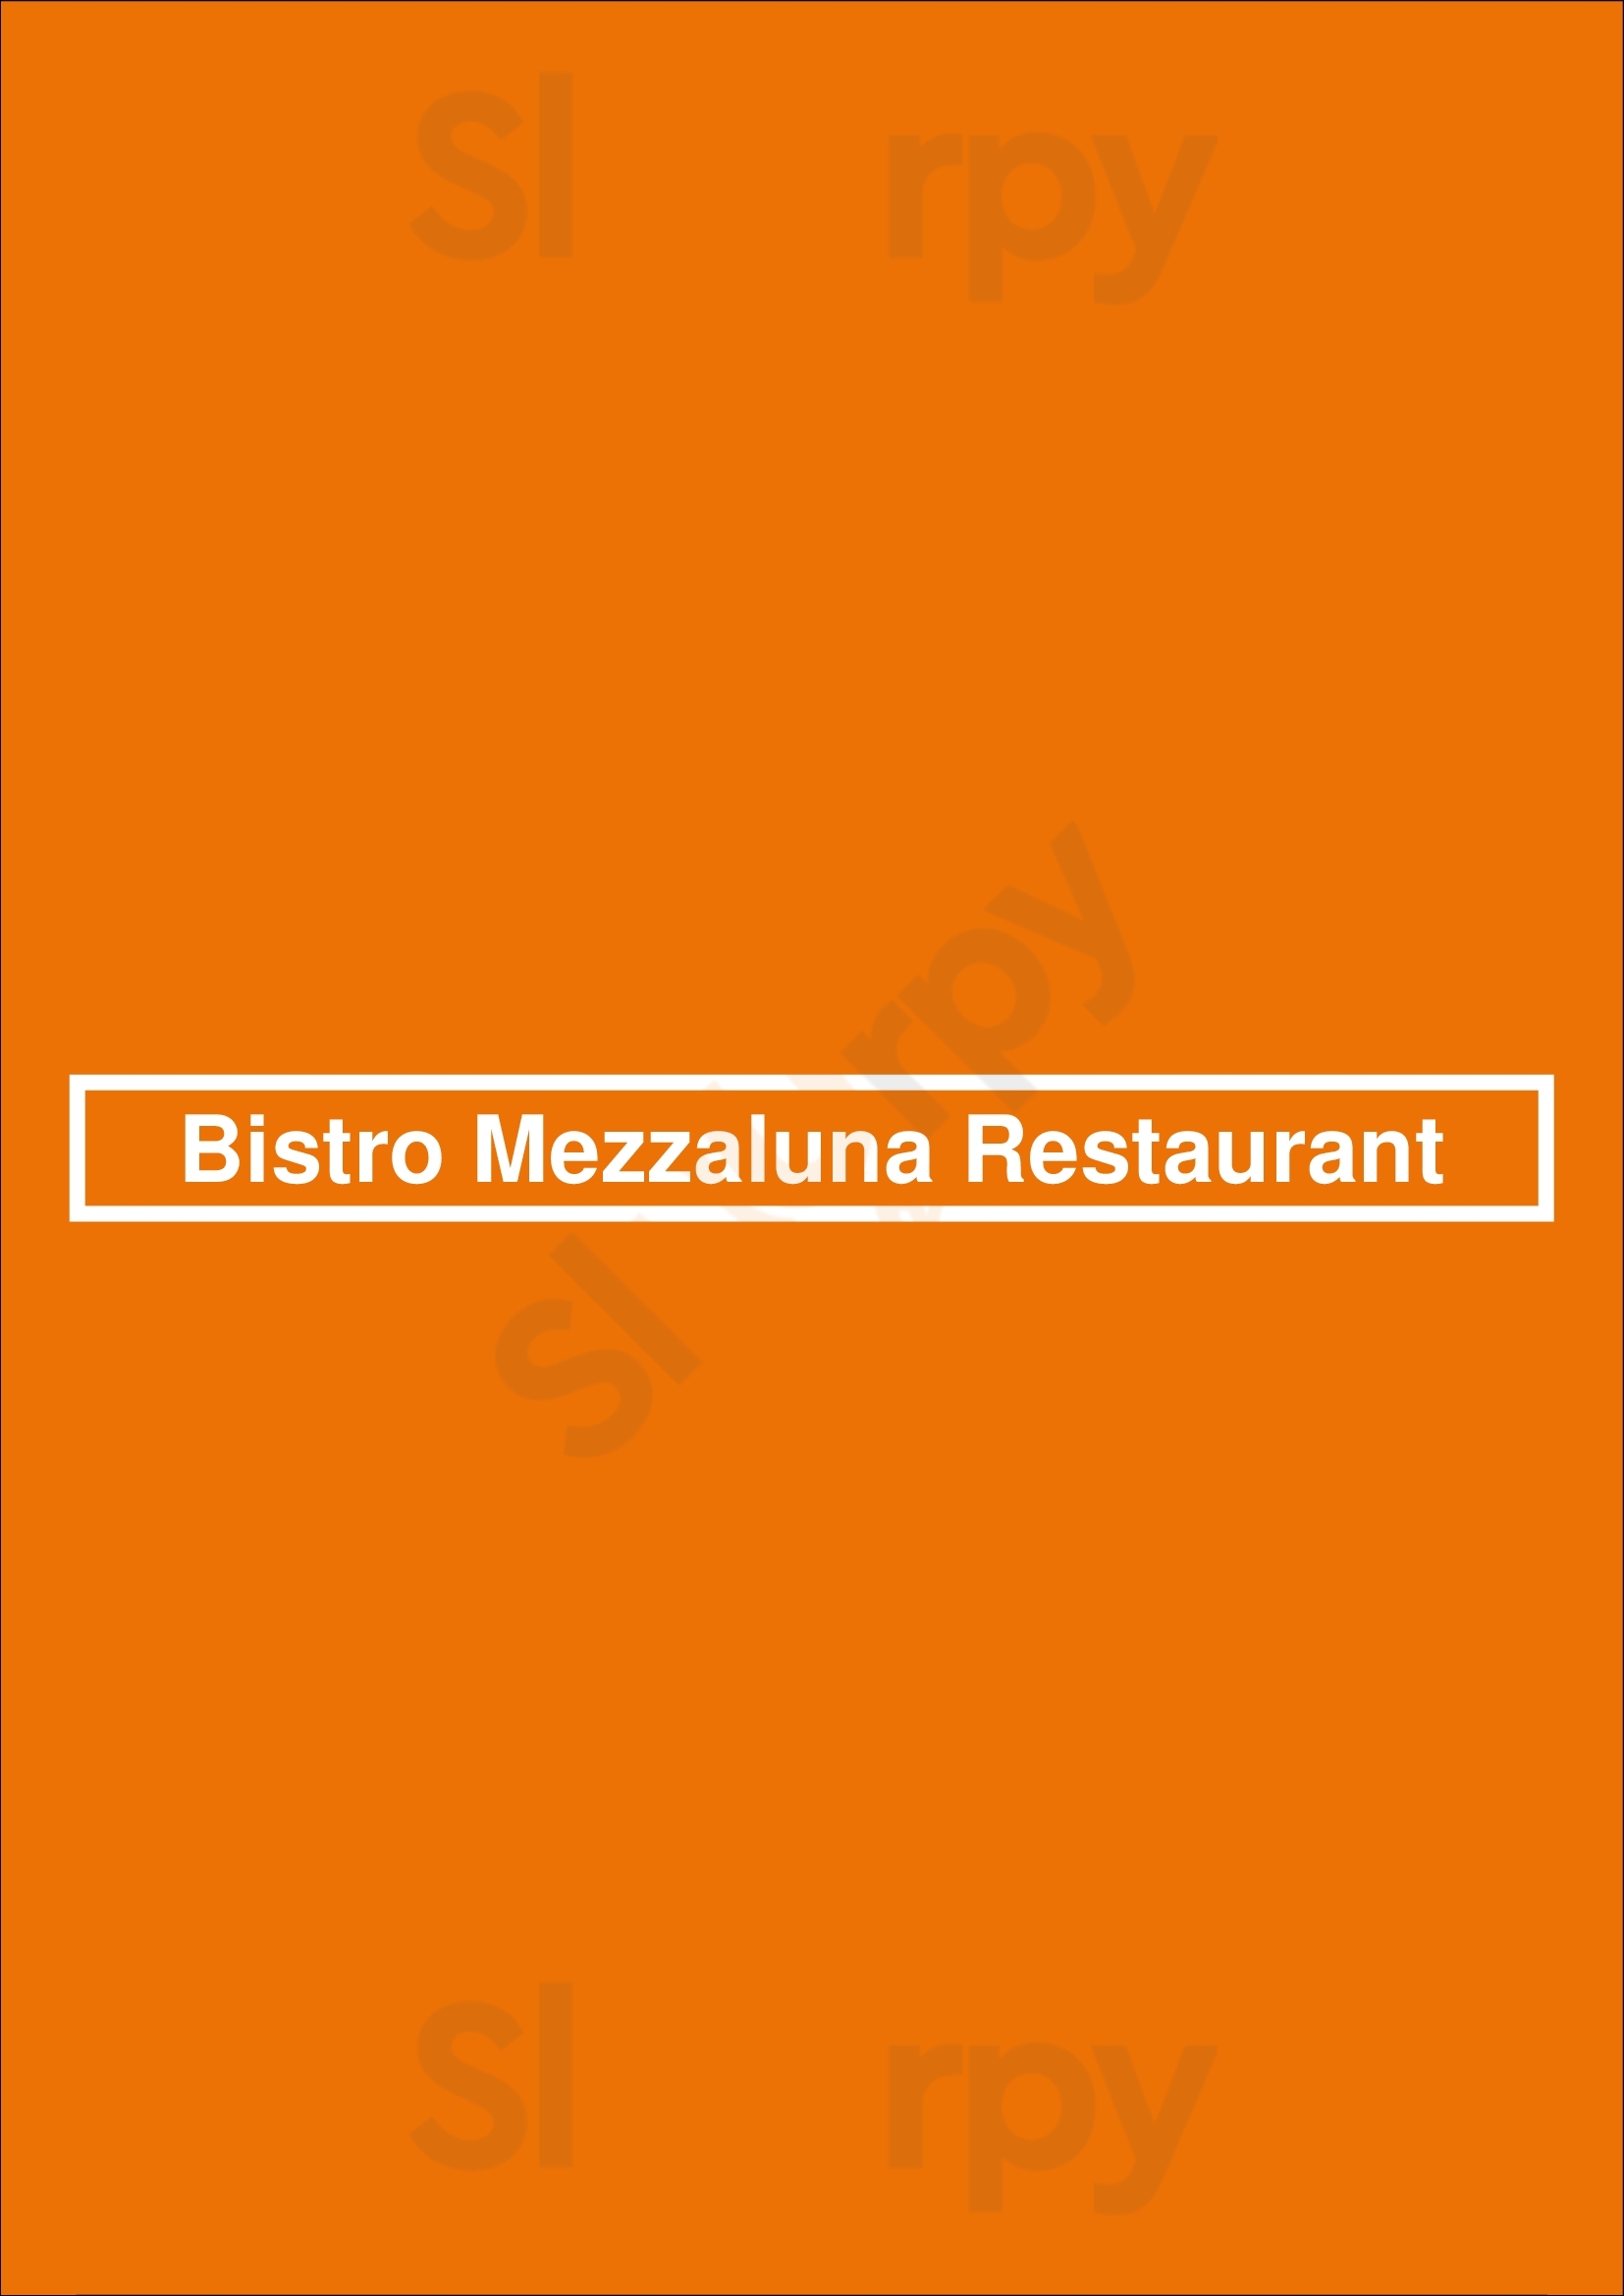 Bistro Mezzaluna Restaurant Fort Lauderdale Menu - 1